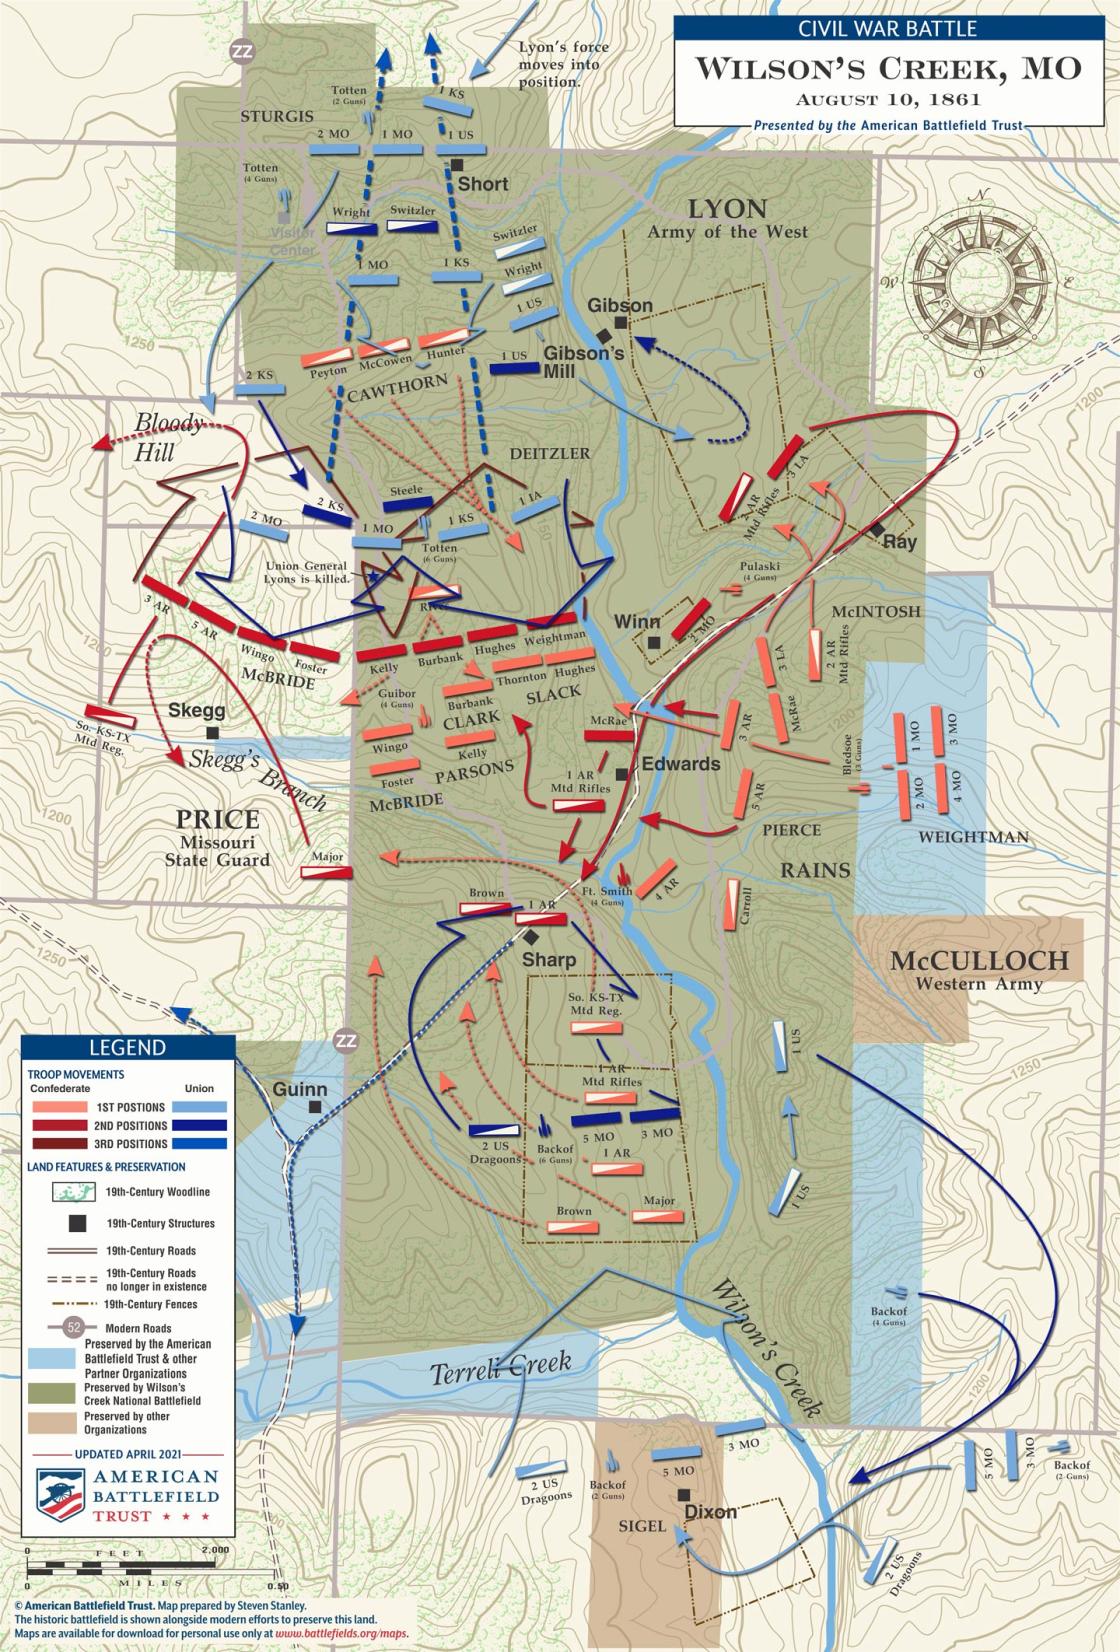 Wilson’s Creek - August 10, 1861 Battle Map